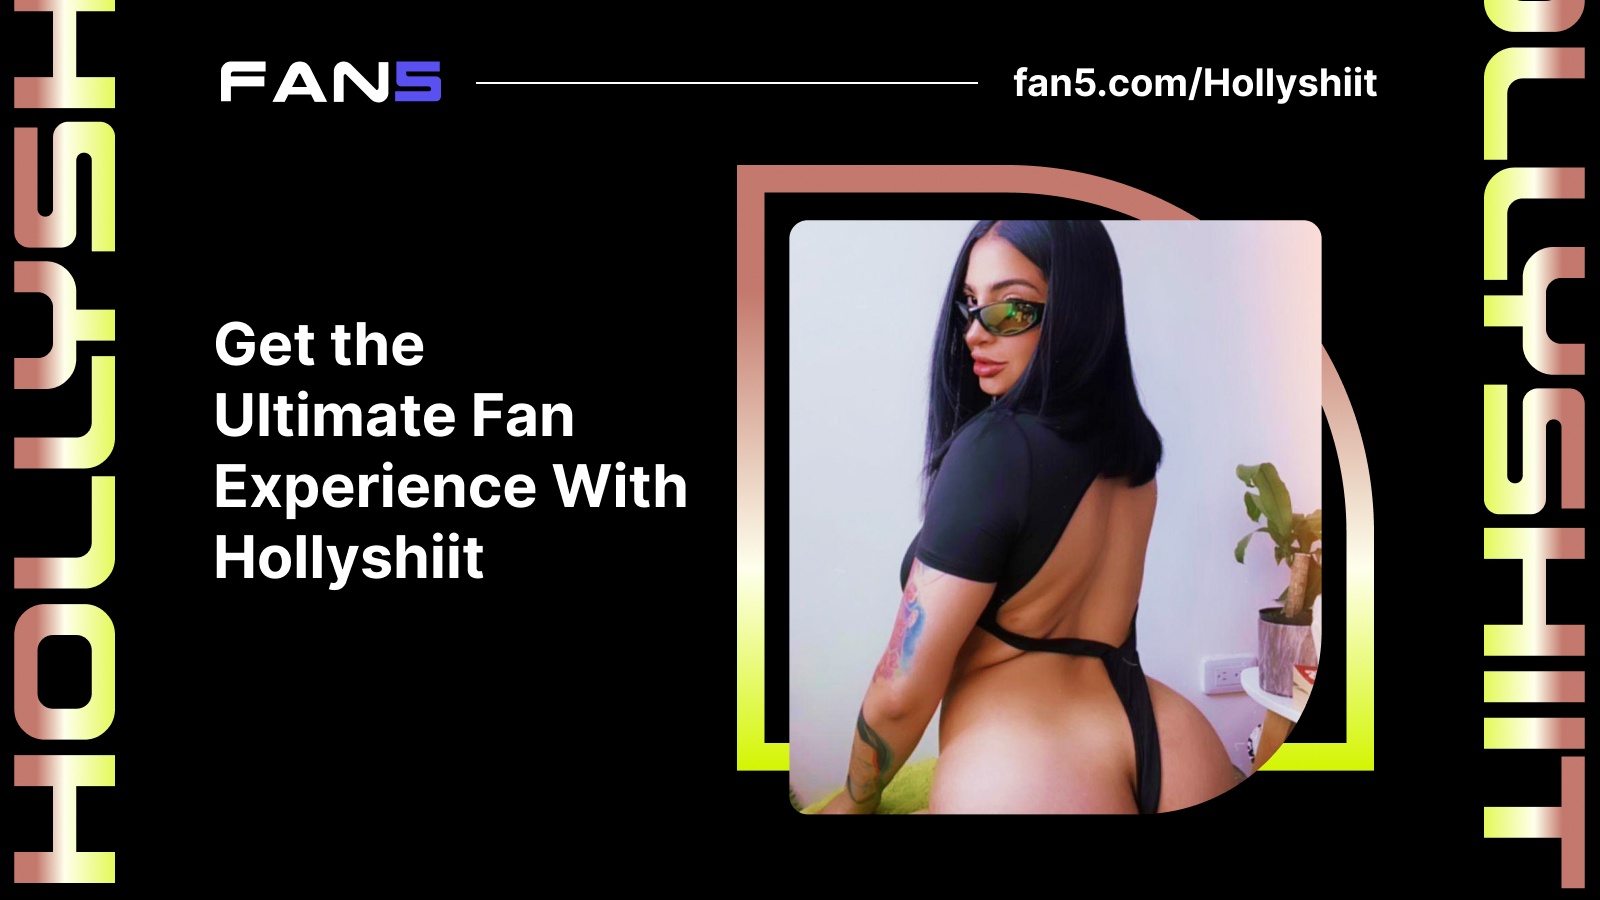 Hollyshiit: Fulfilling Fantasies Through The Eroticism of Sensory Pleasure